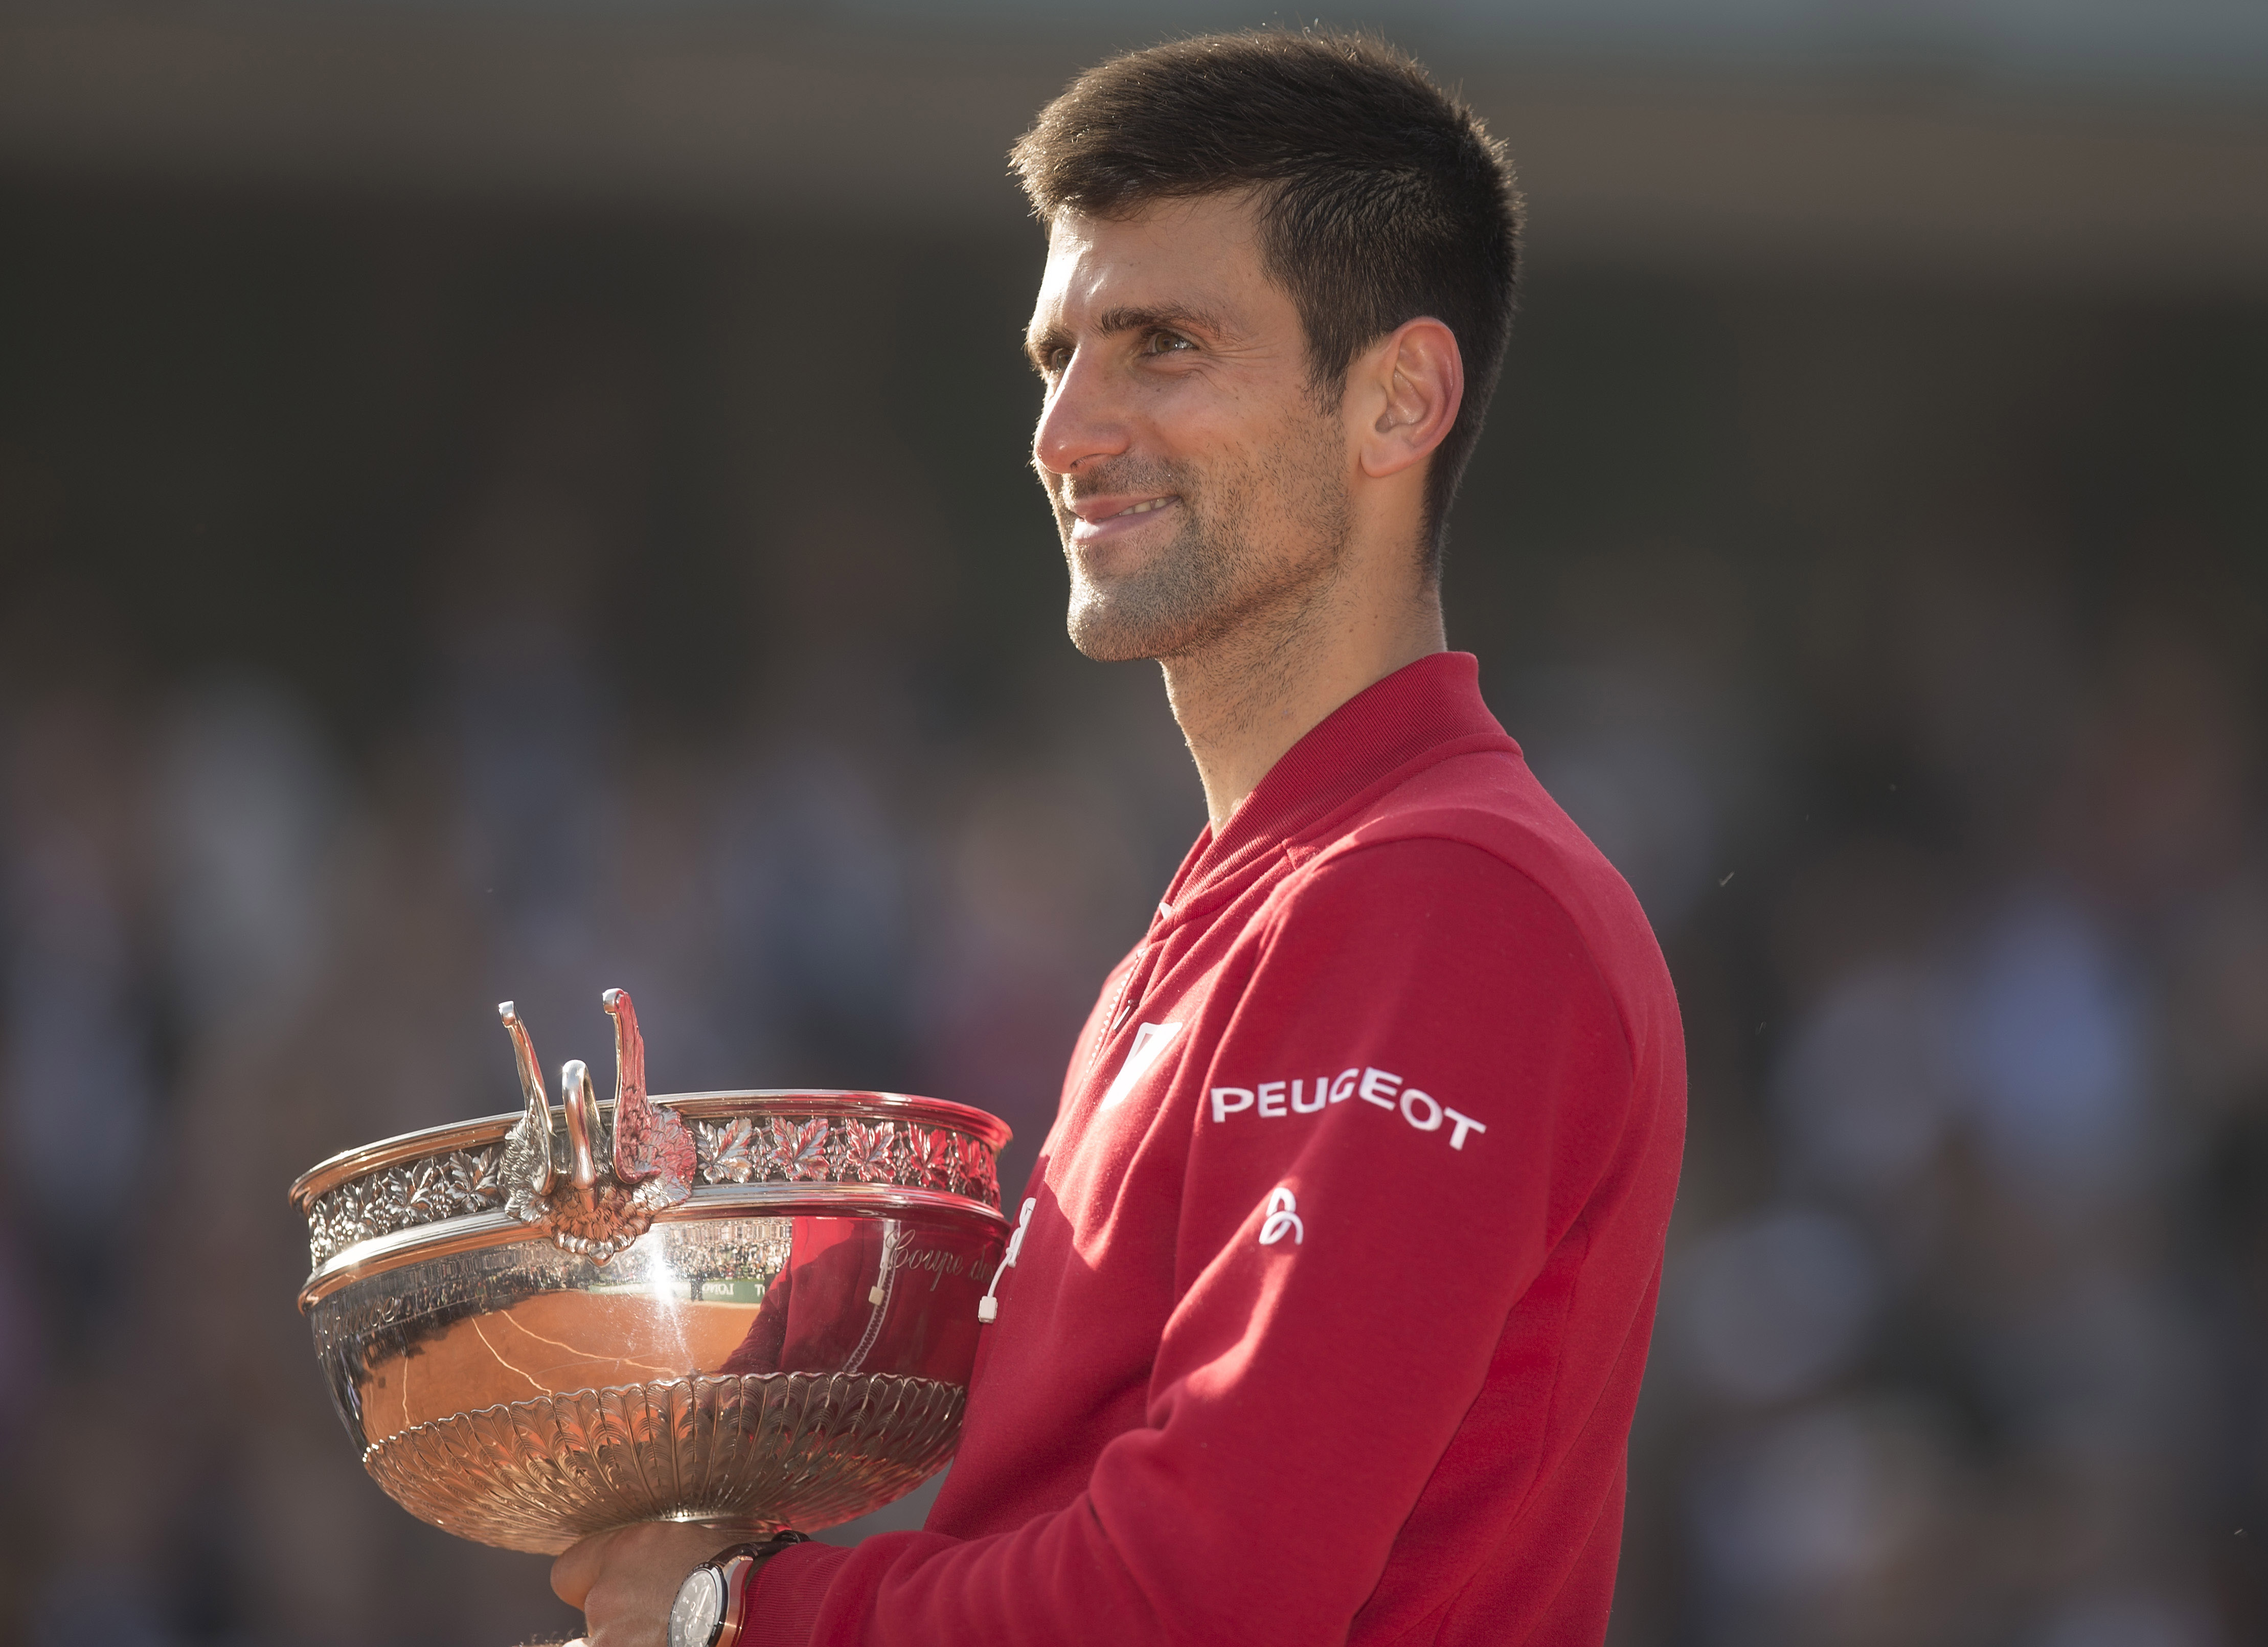 Novak Djokovic enters Wimbledon in unique position  9news.com